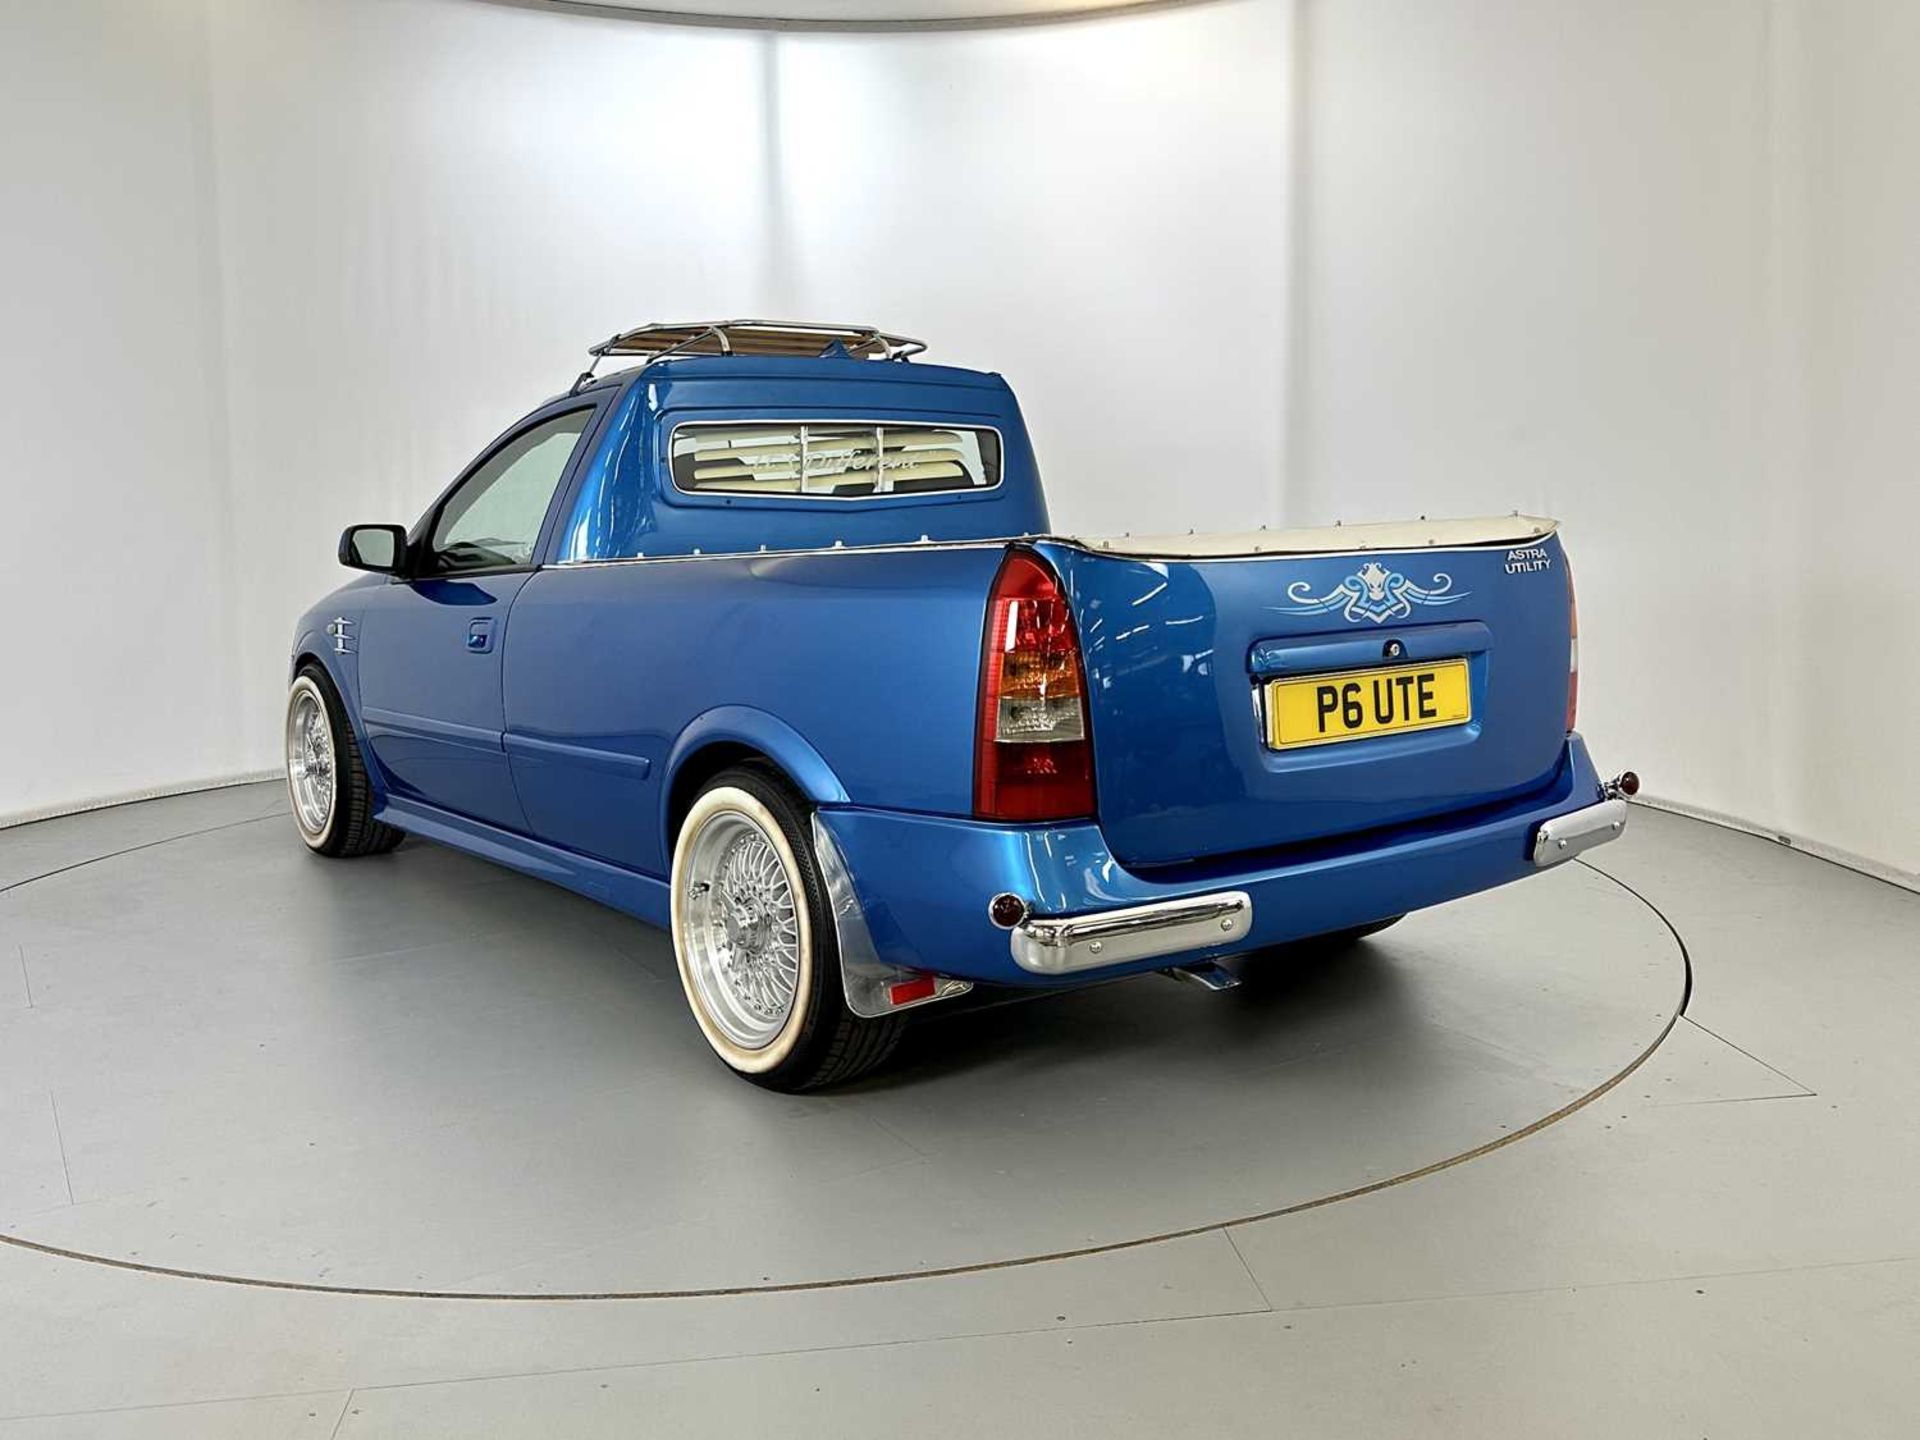 2000 Vauxhall Astra Pickup - Image 7 of 30